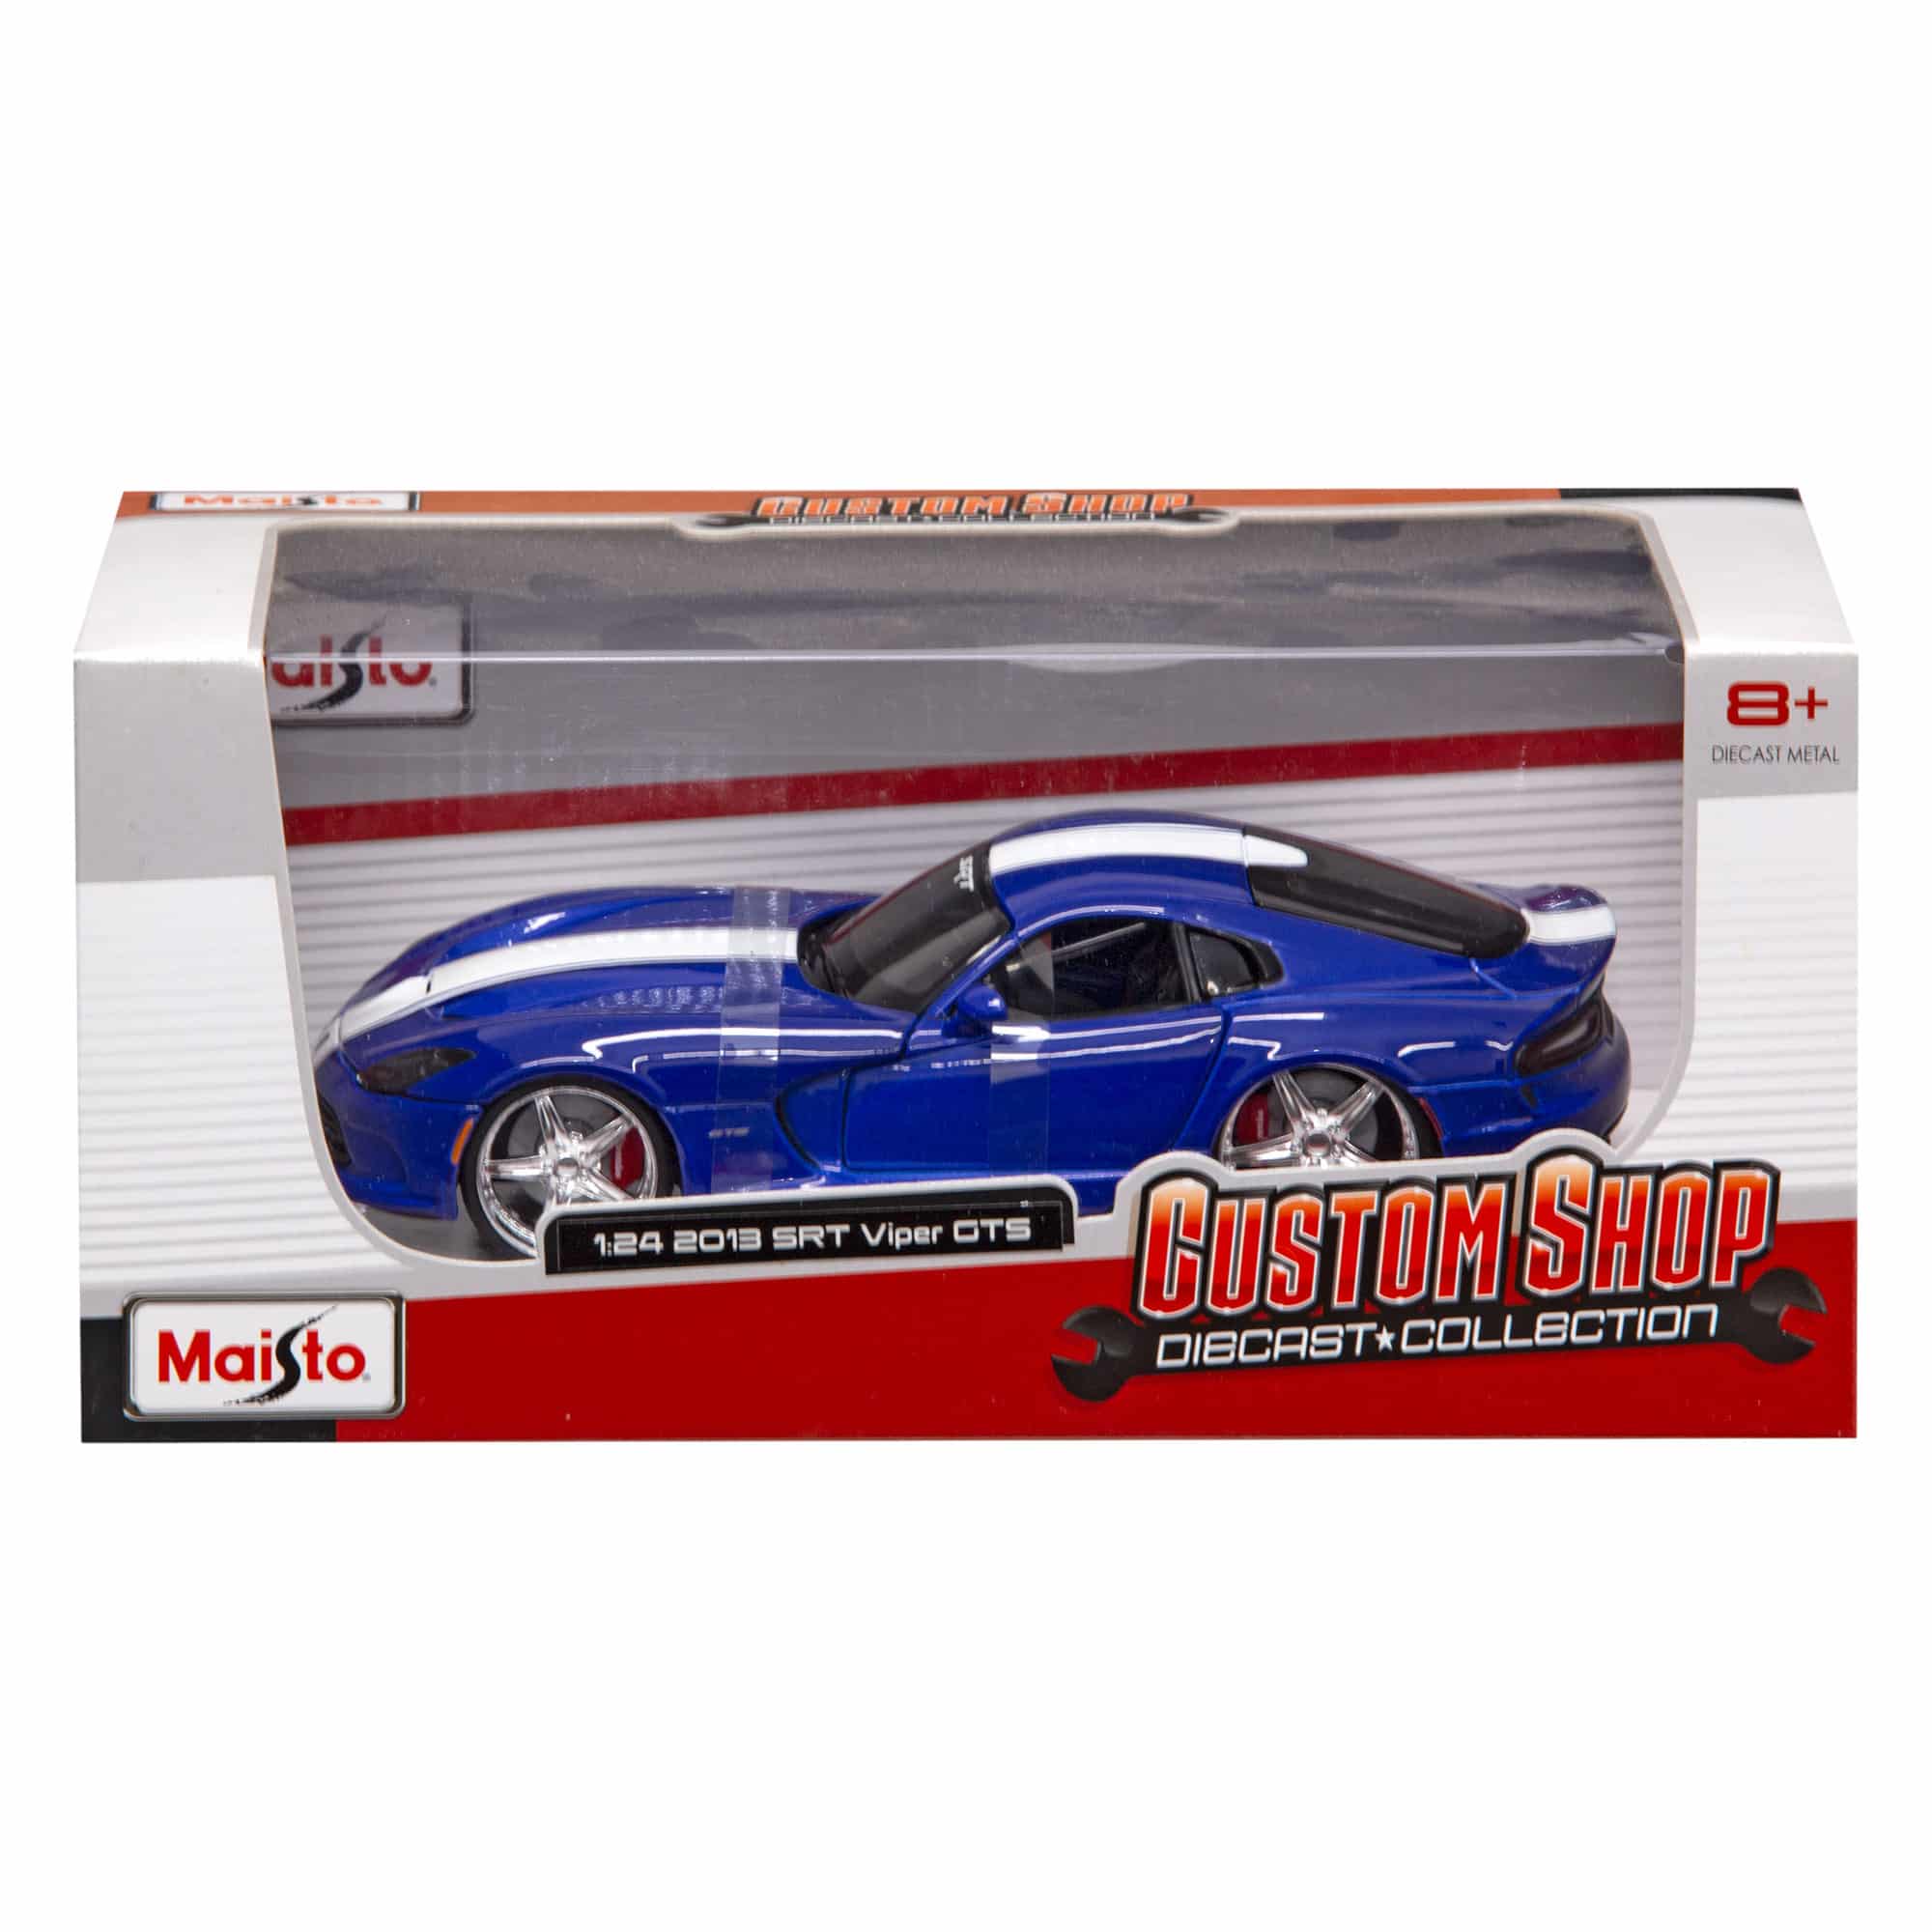 Maisto - Die-Cast Custom Shop - 1:24 Scale 2013 SRT Viper GTS (blue)